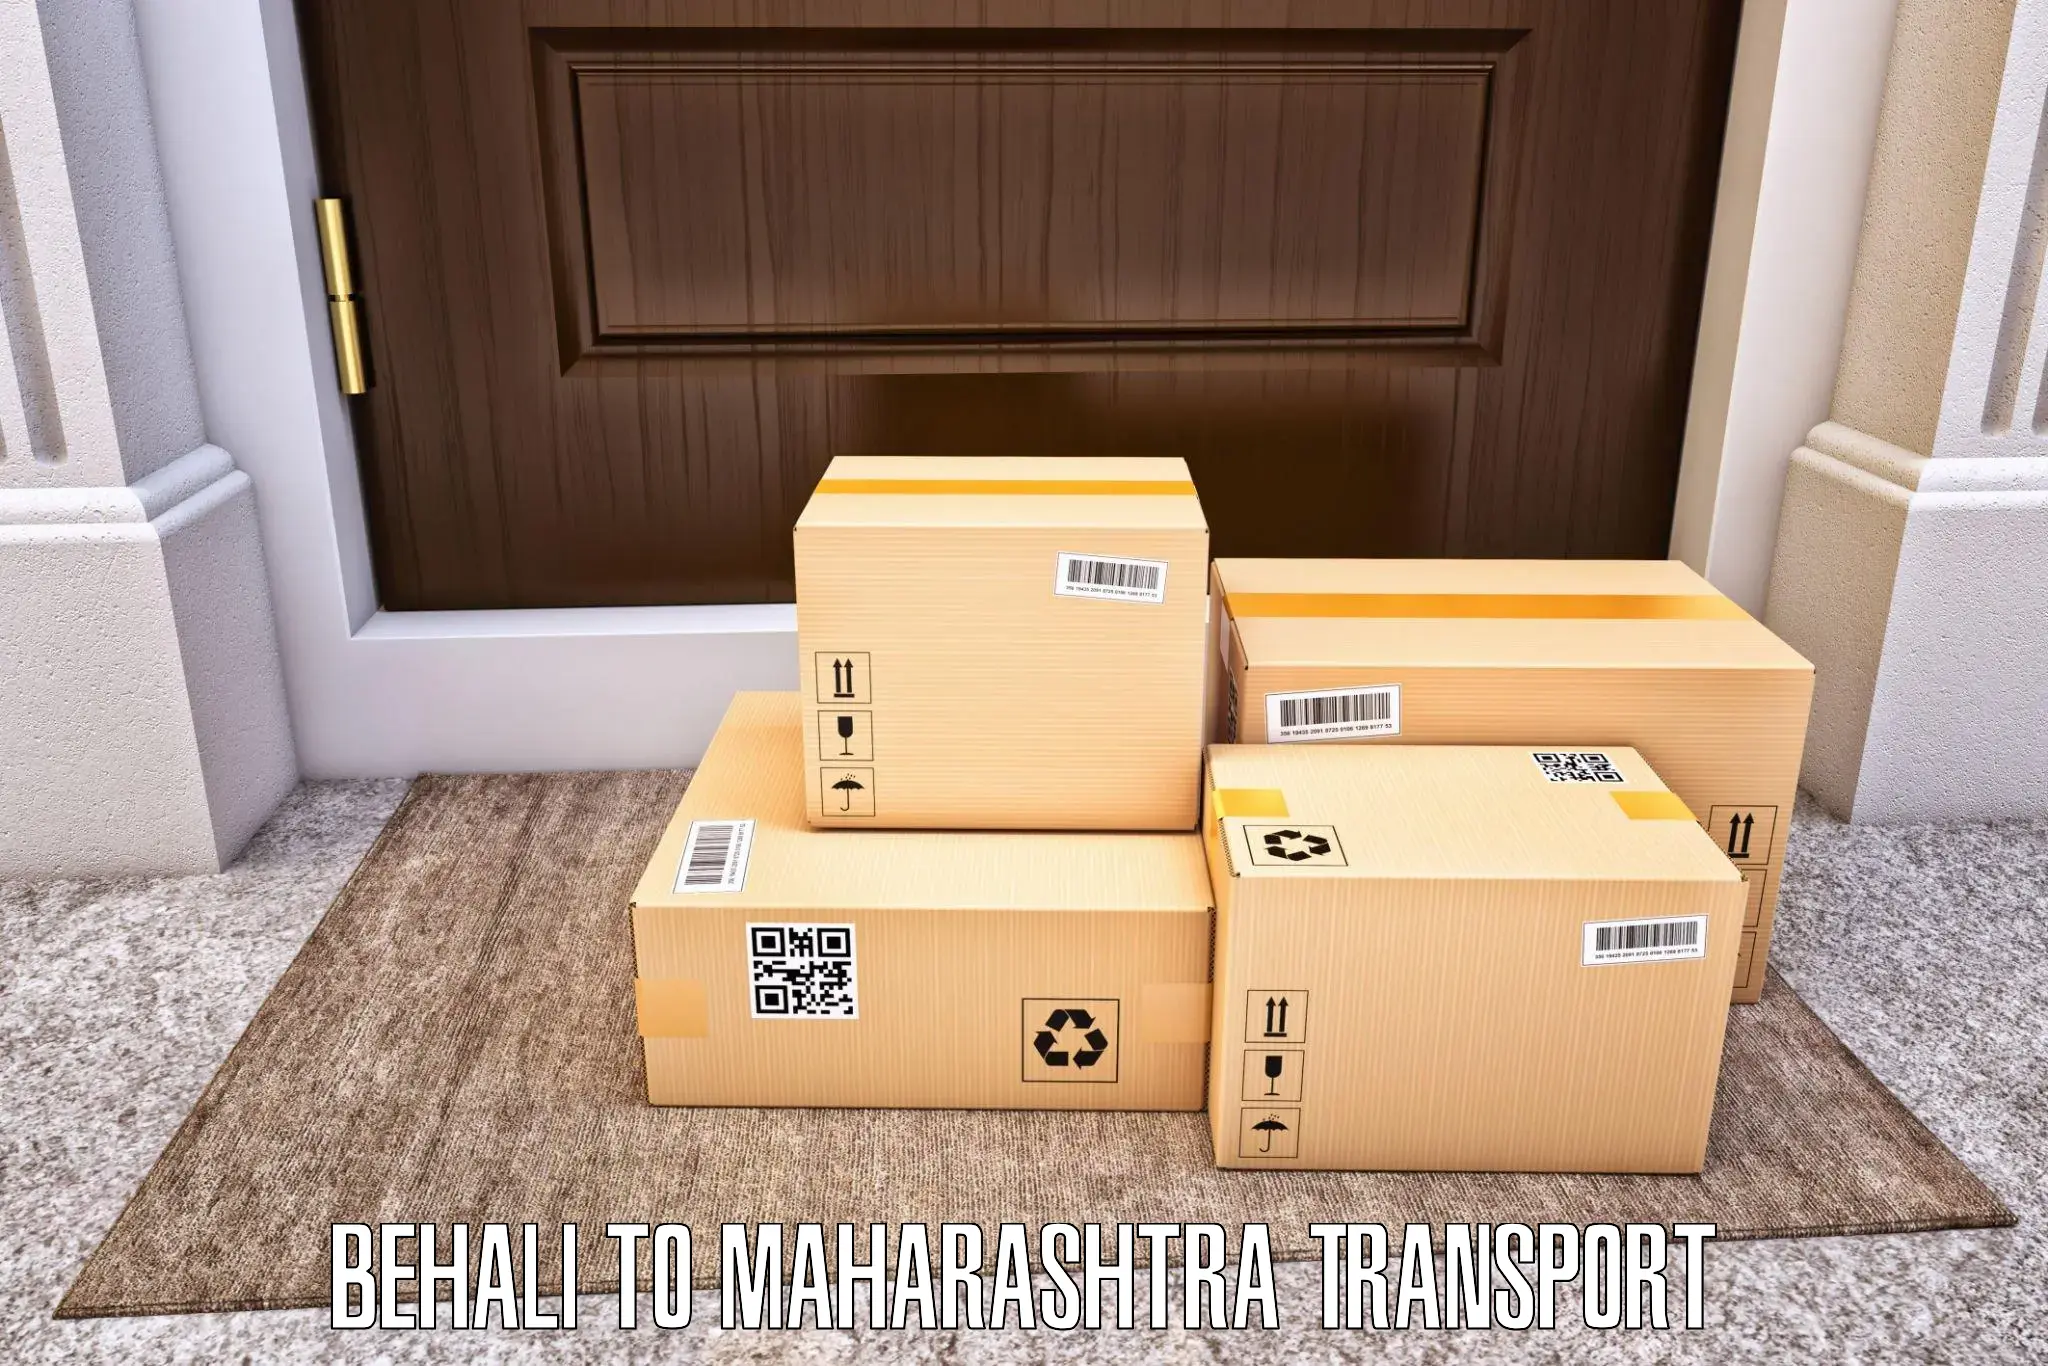 Truck transport companies in India Behali to Omerga